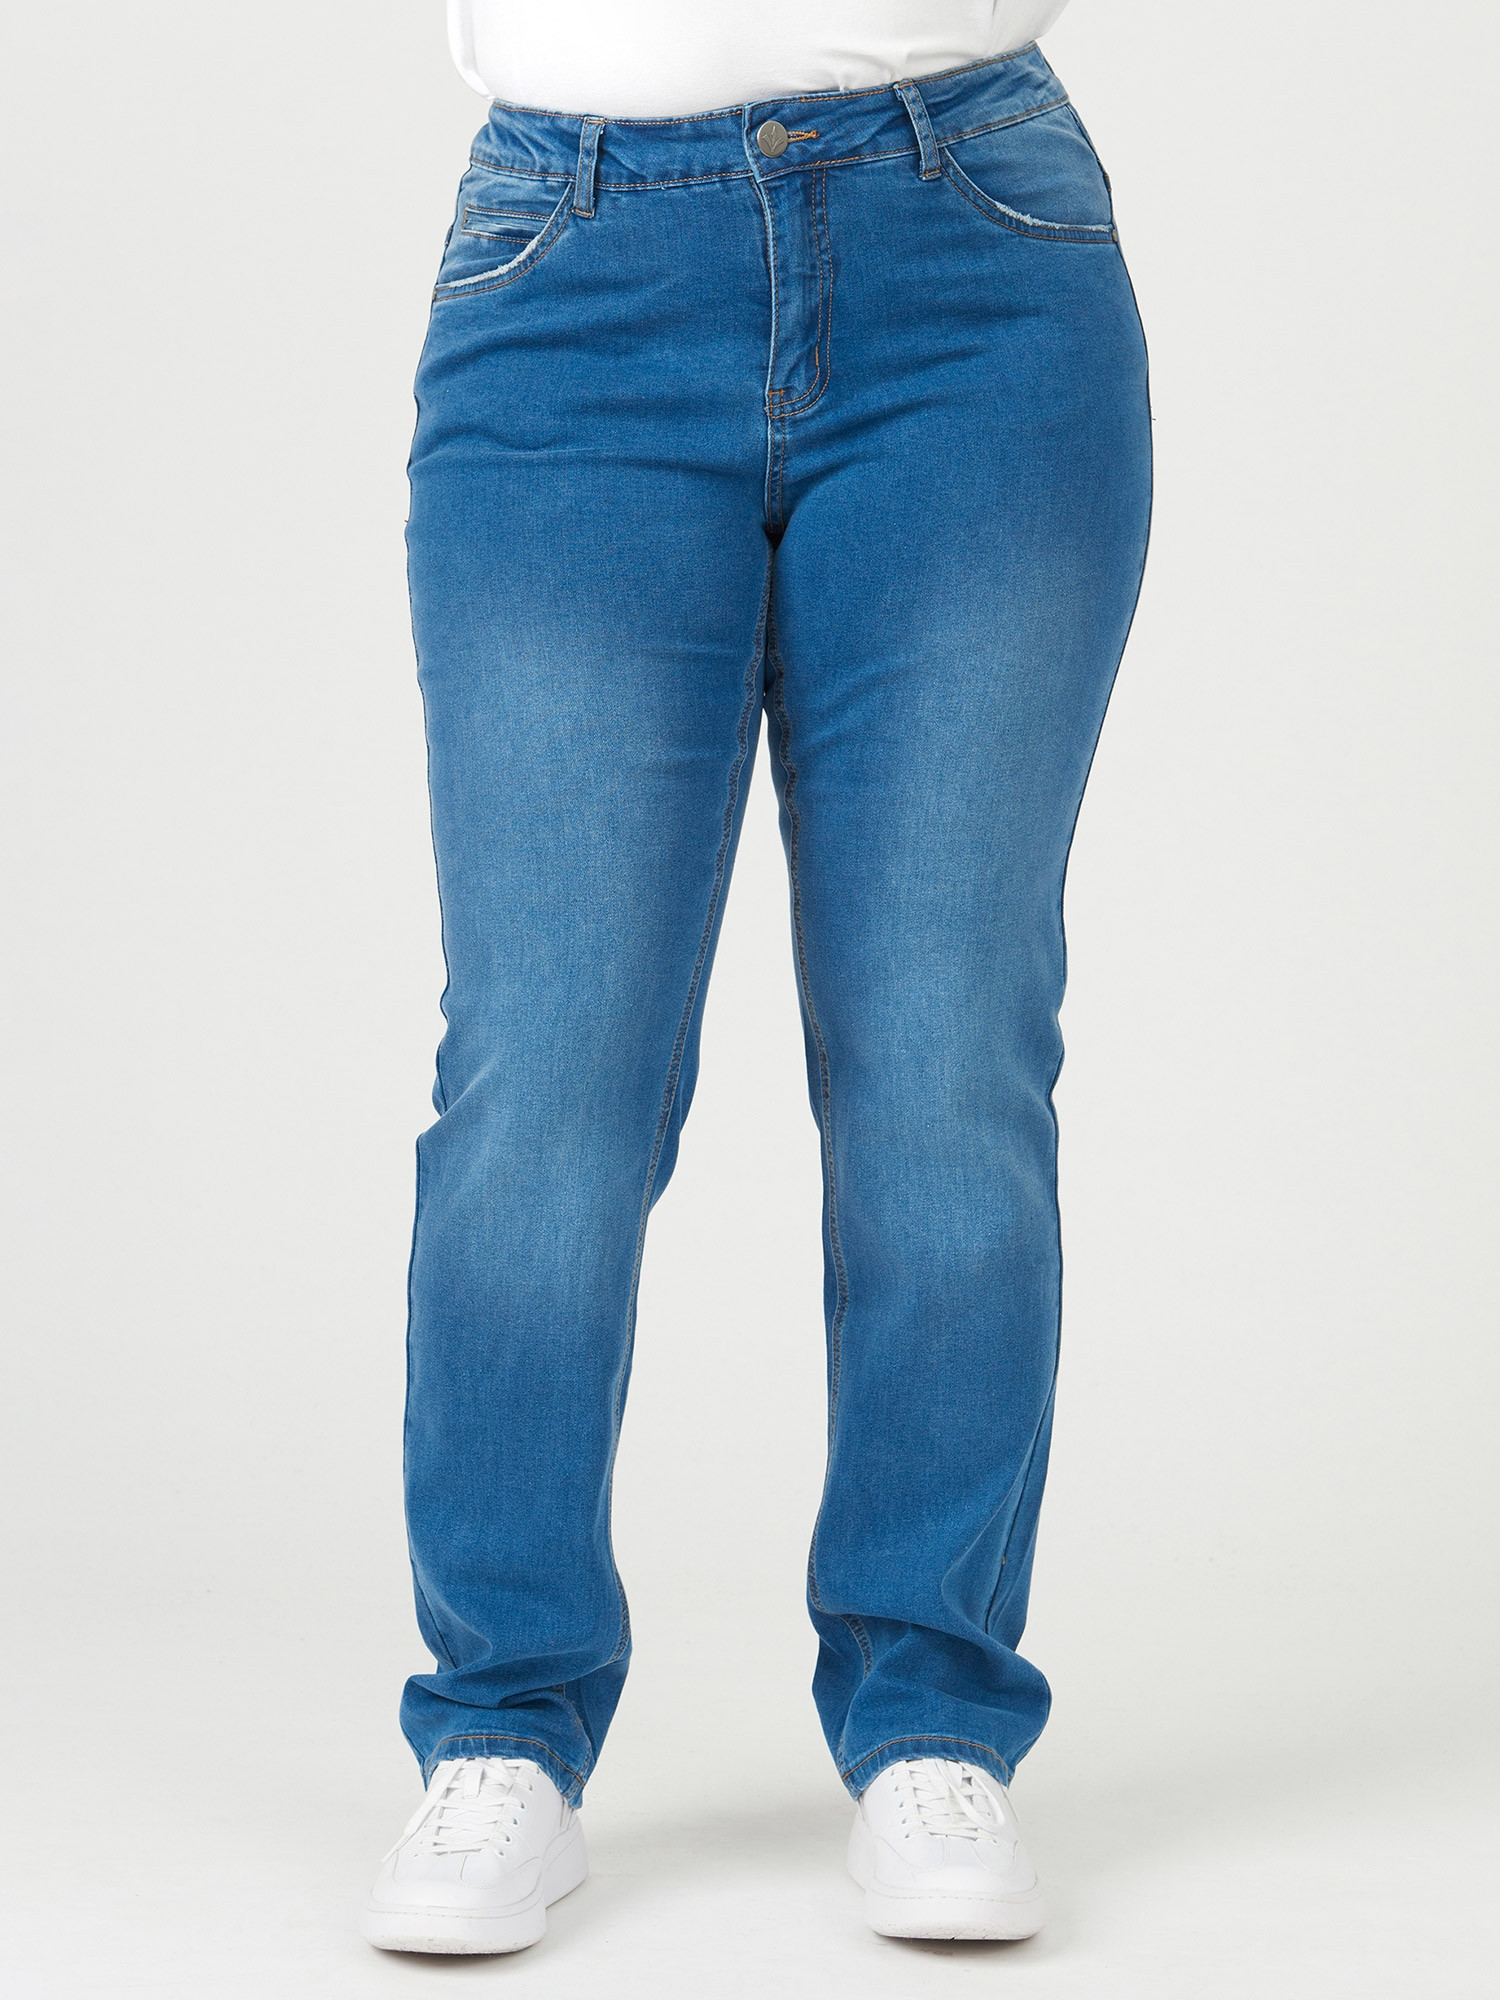 ROME - Blå jeans med stretch